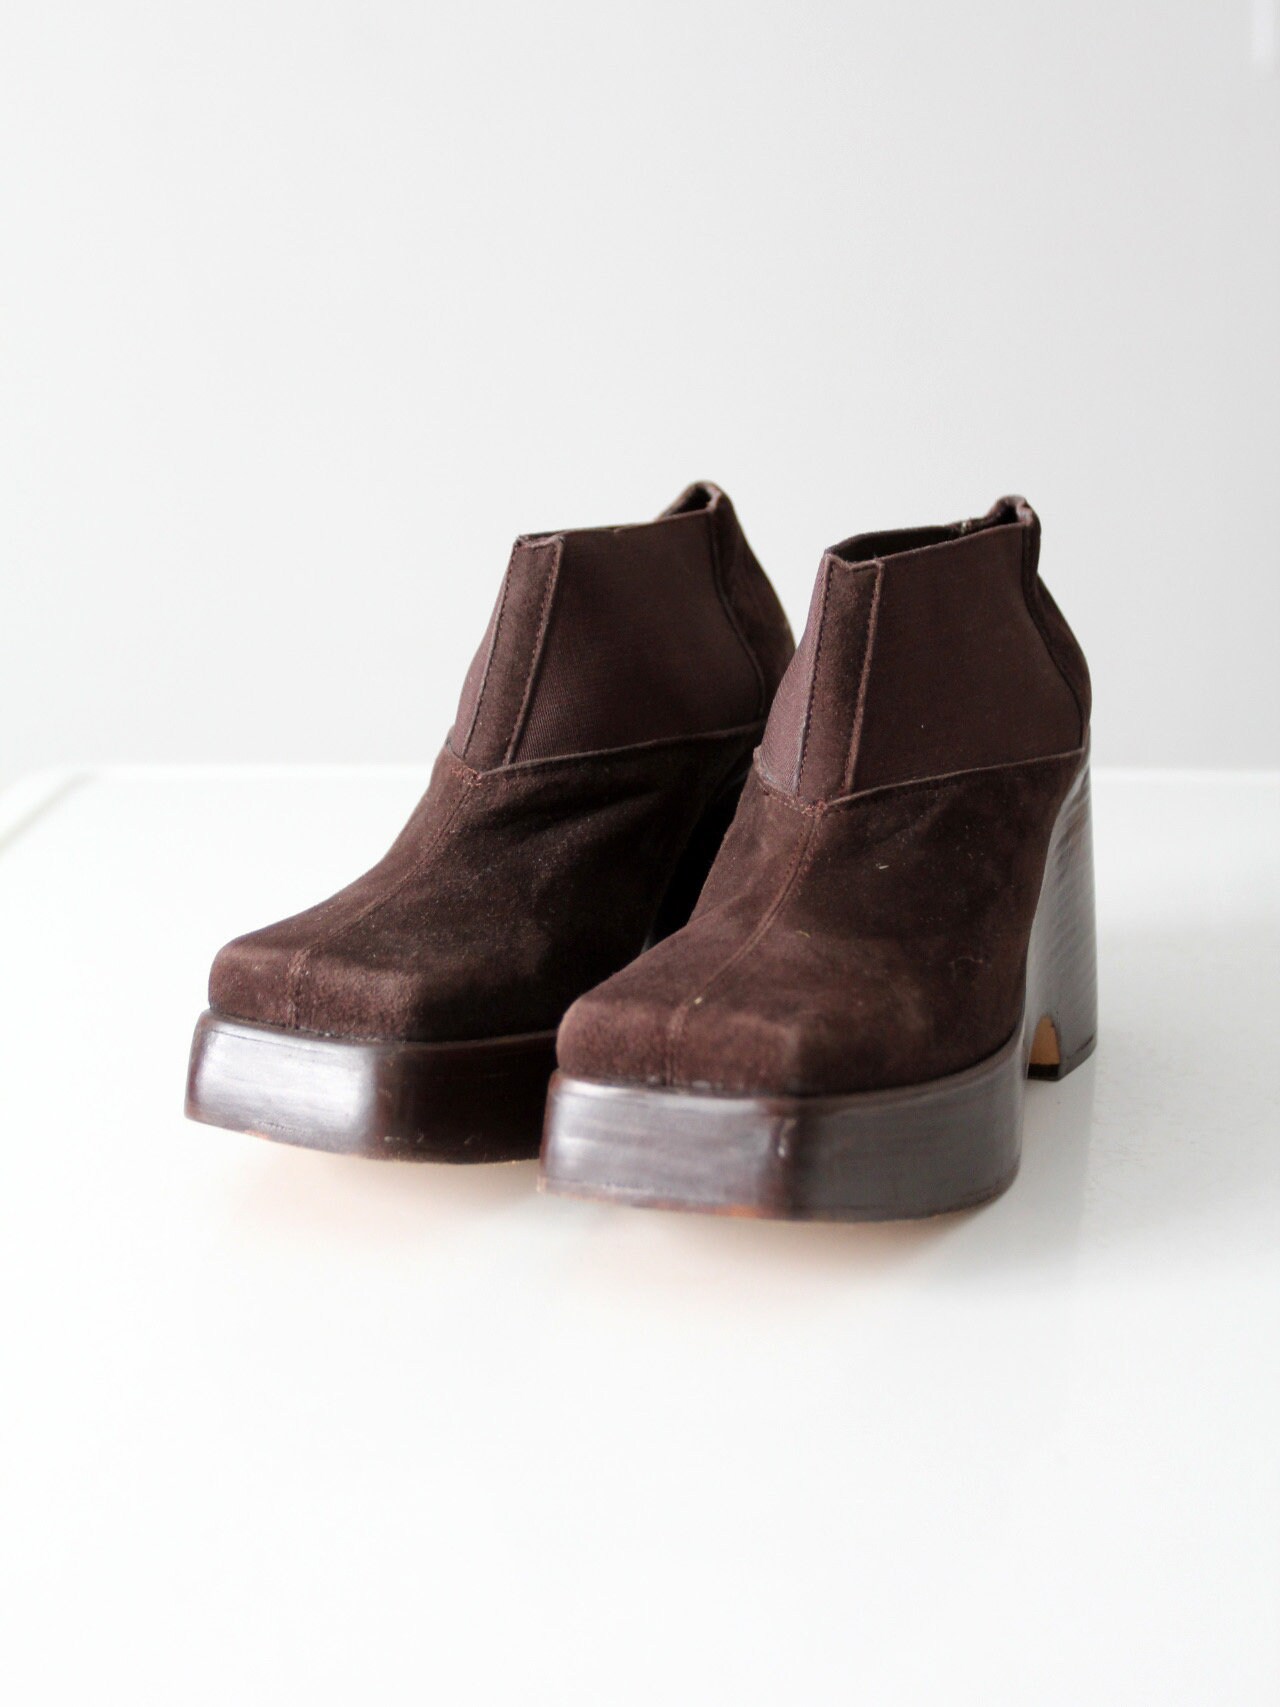 Vintage Hippie Nine West 7.5 M Tan Leather Suede Wedge Platform Shoes